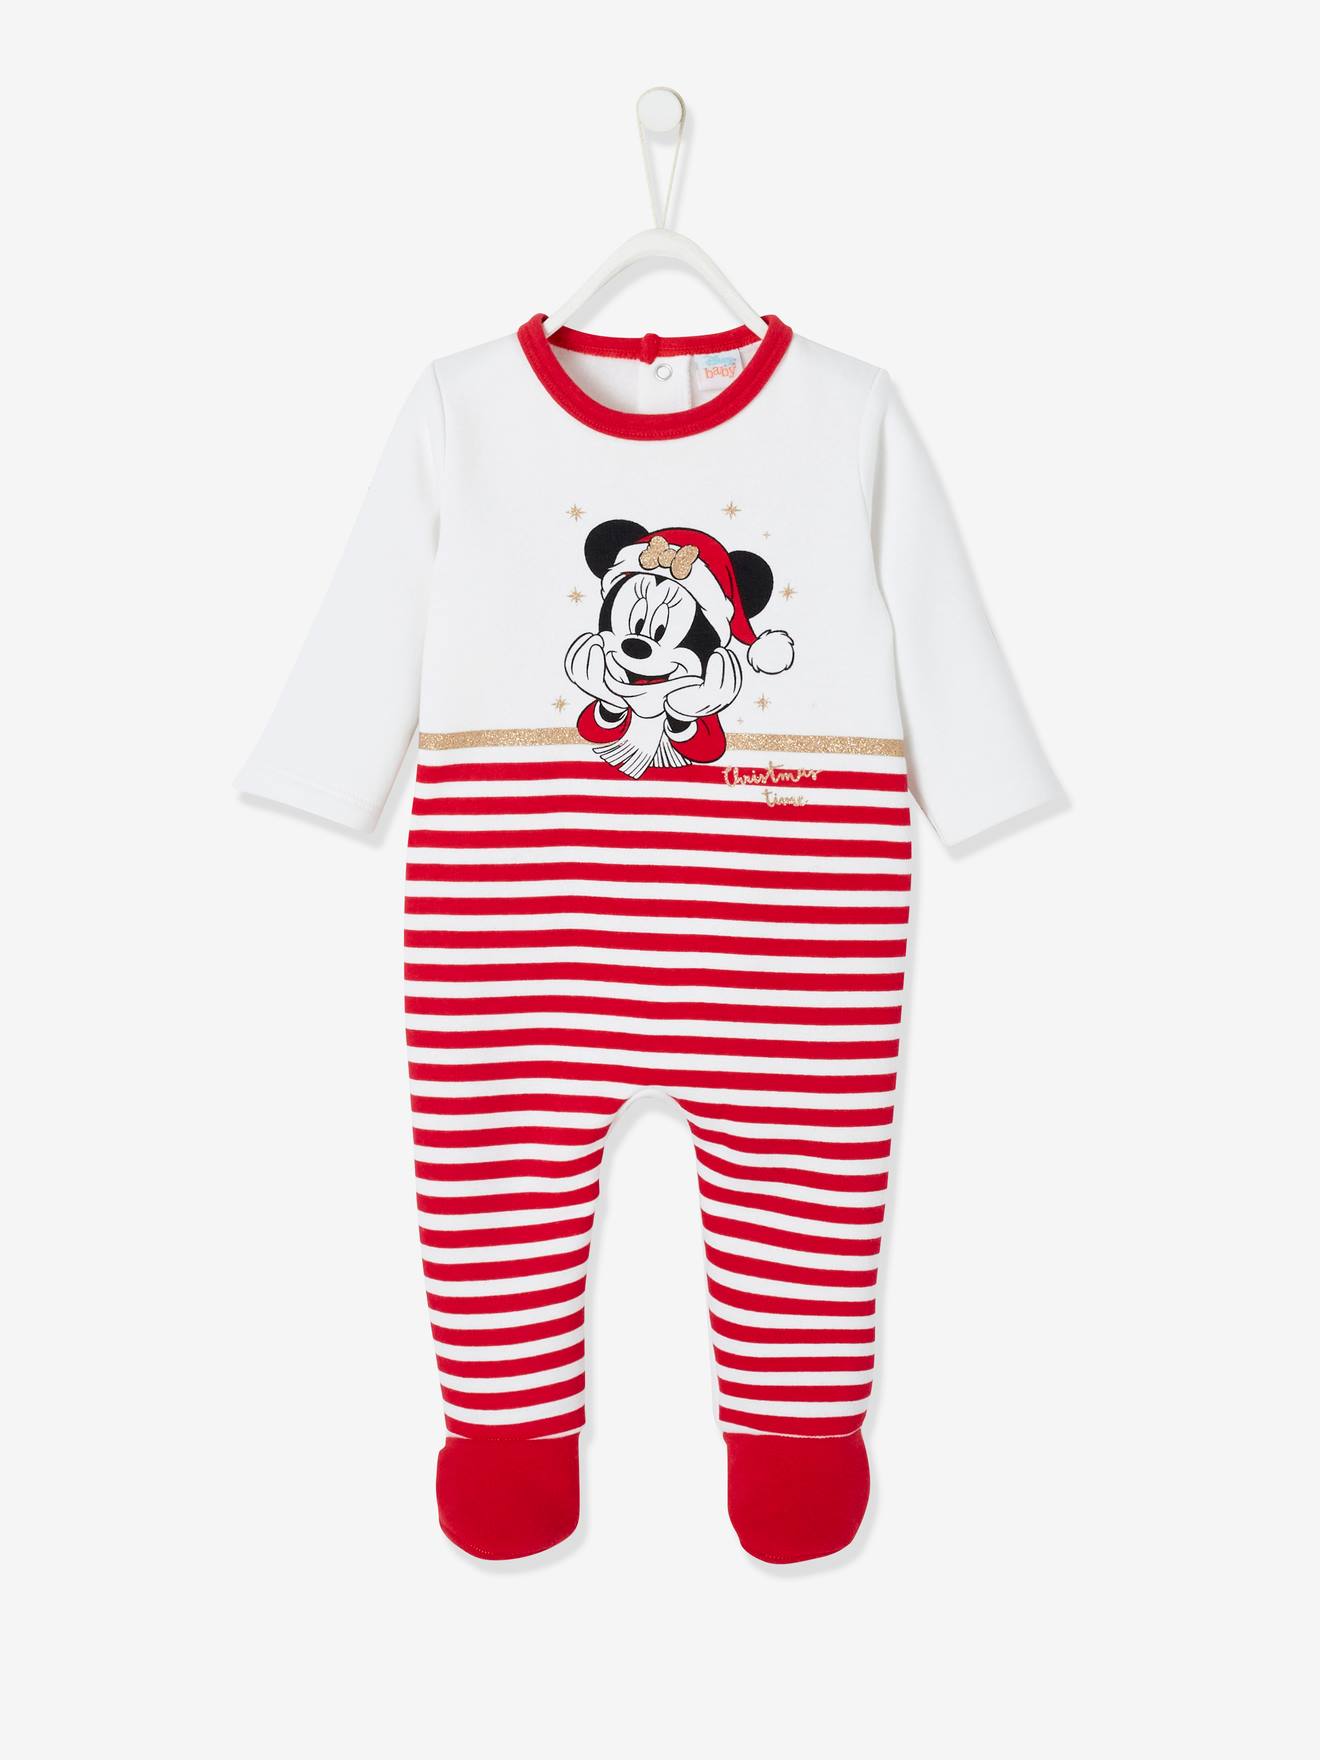 Pijama Navidad Disney® Minnie, para bebé niña blanco claro liso con motivos